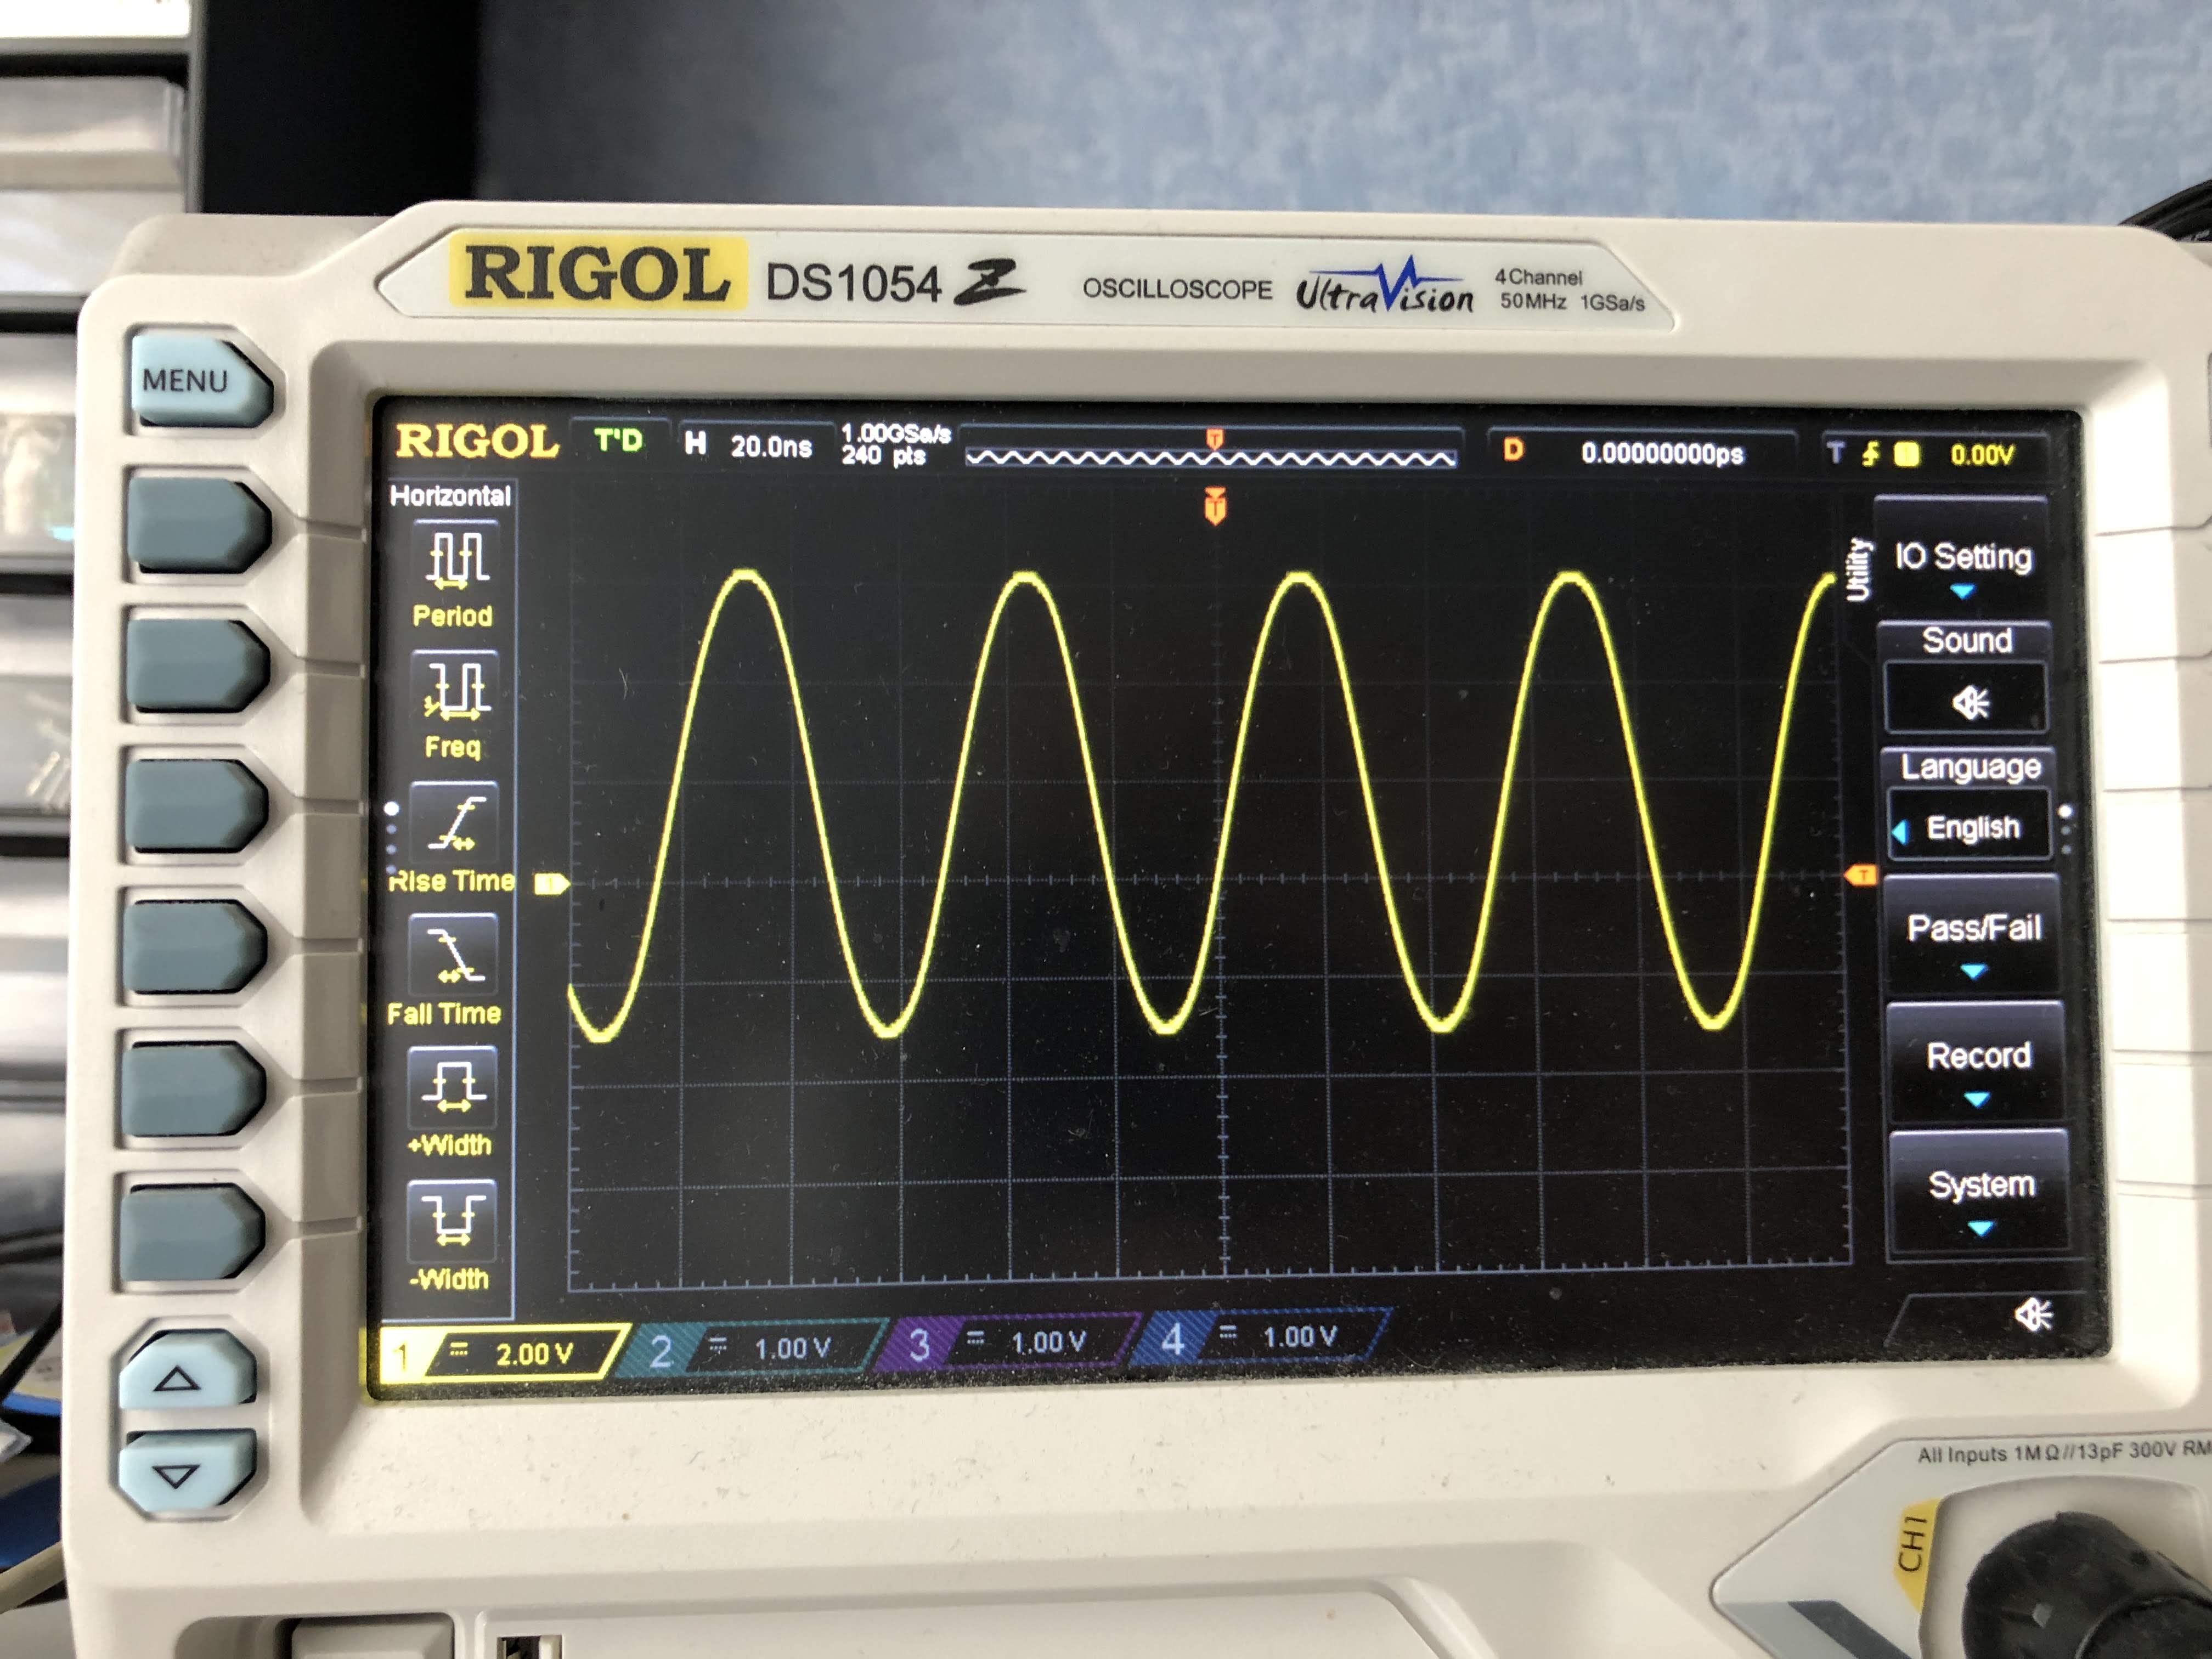 Oscilloscope, showing sine waveform